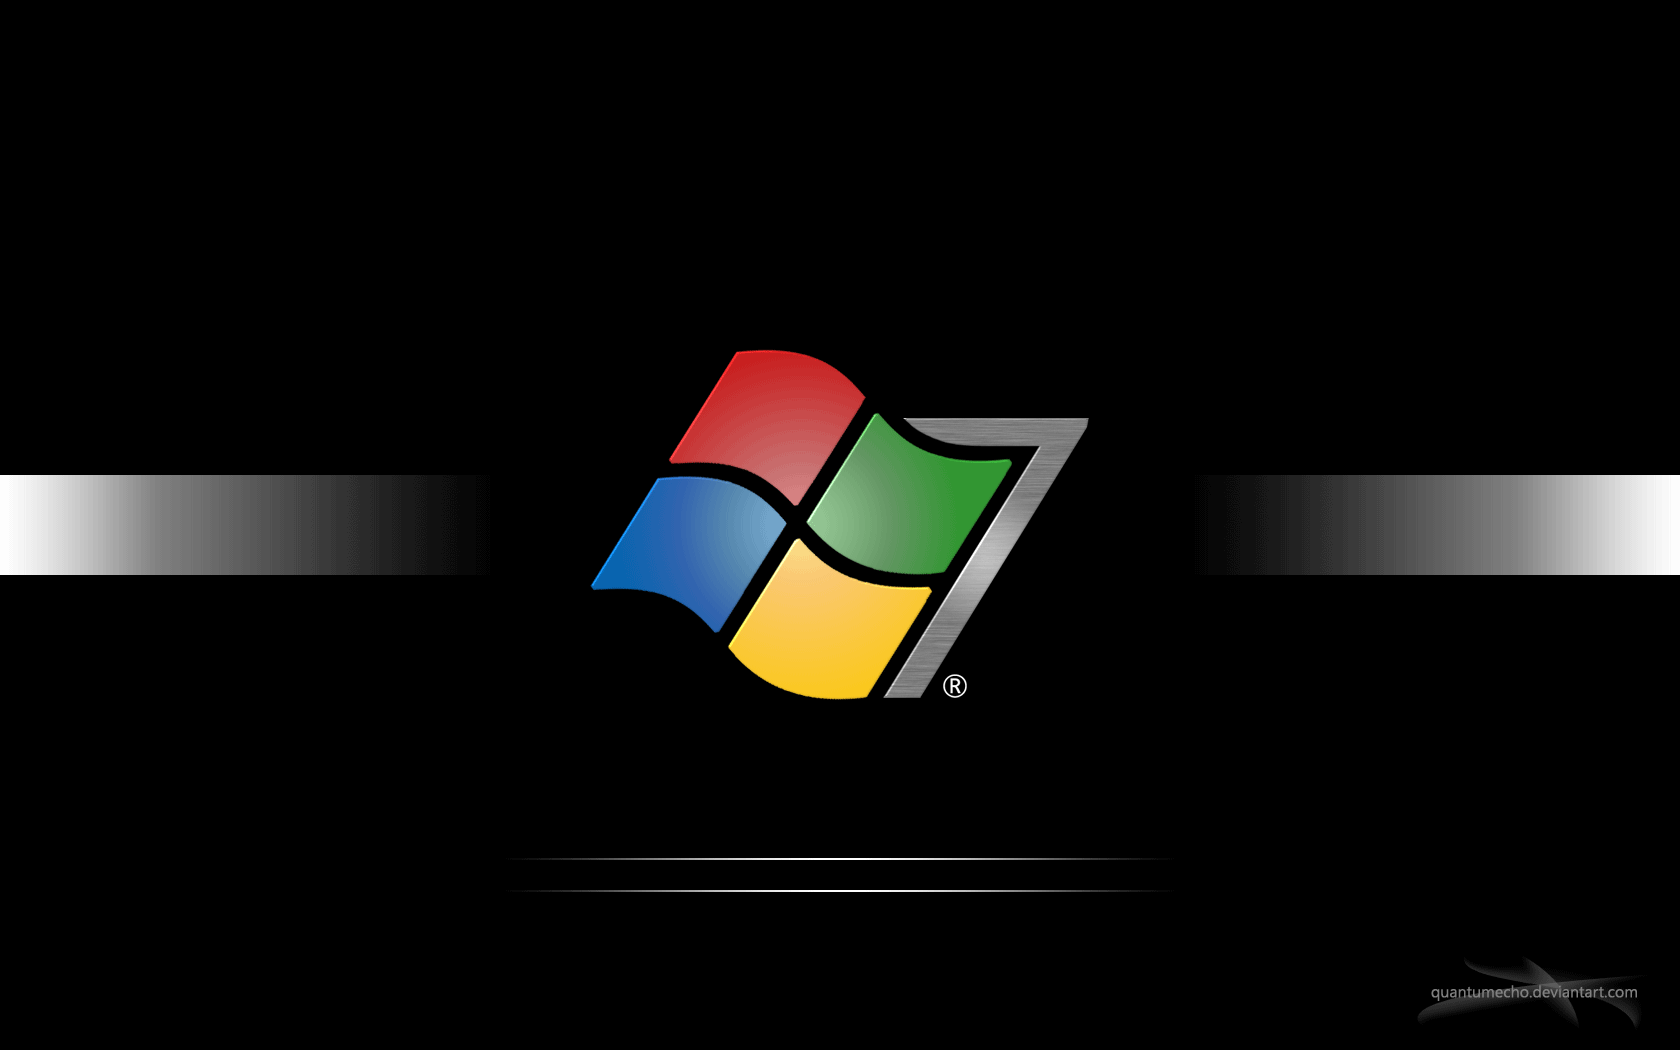 Windows 7 Animated GIF Wallpaper